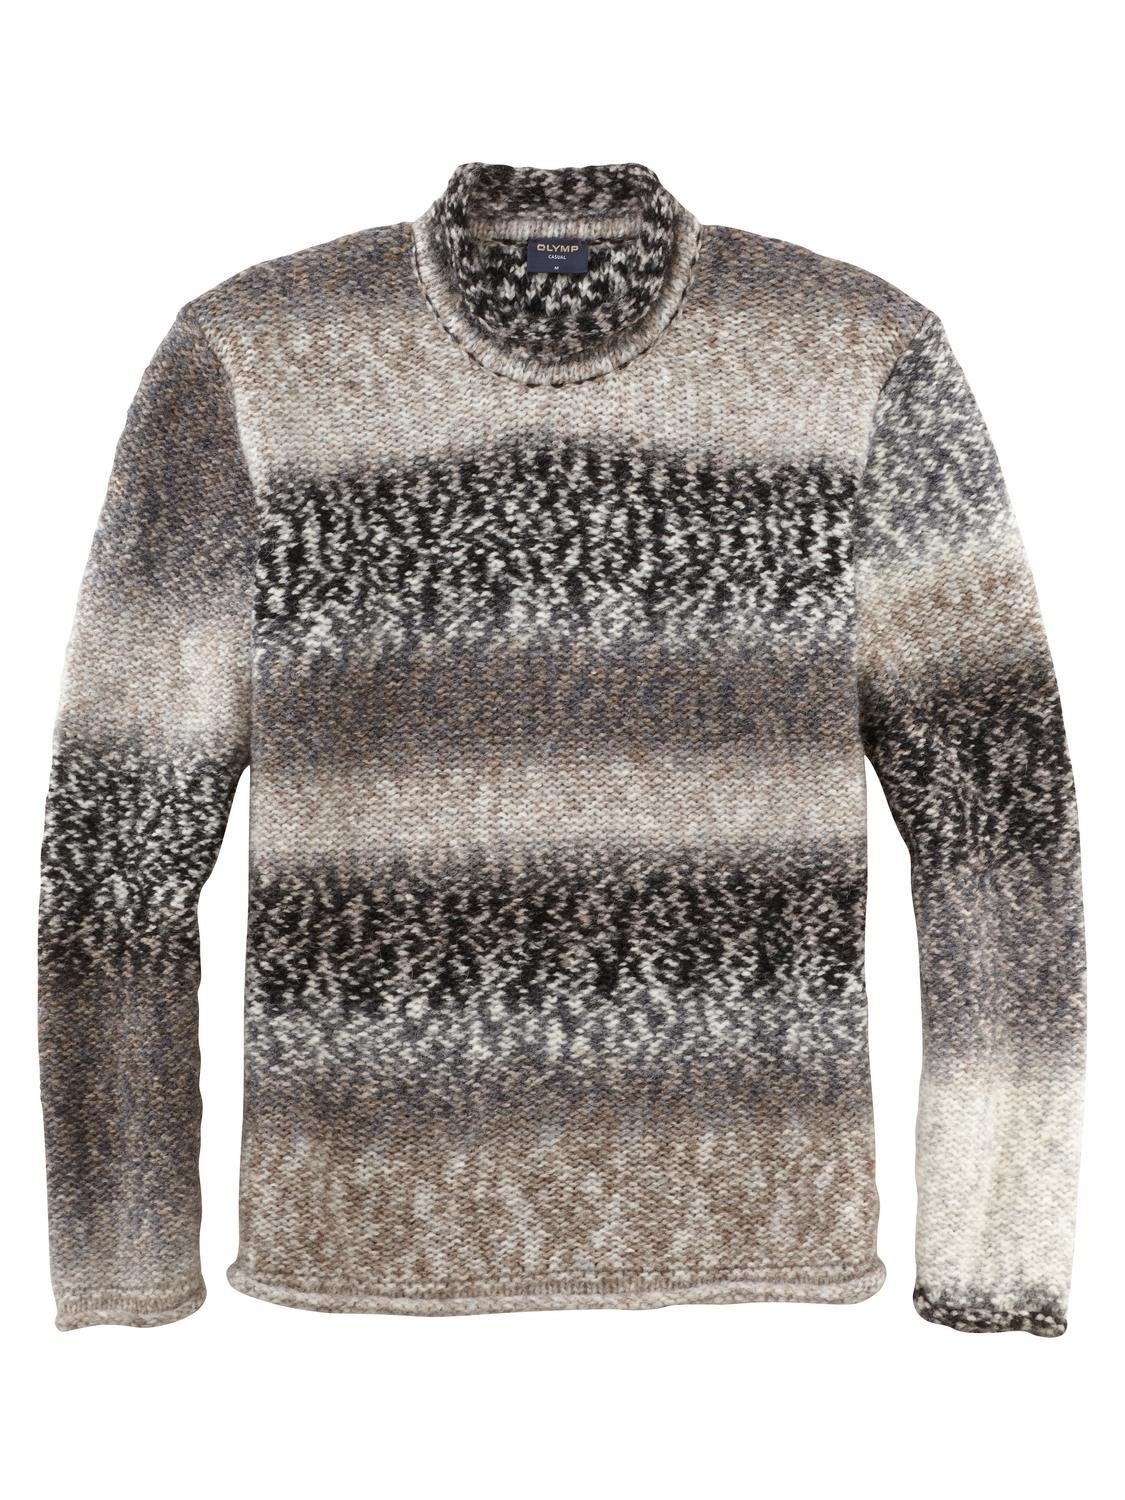 OLYMP Sweatshirt 5334/45 Pullover